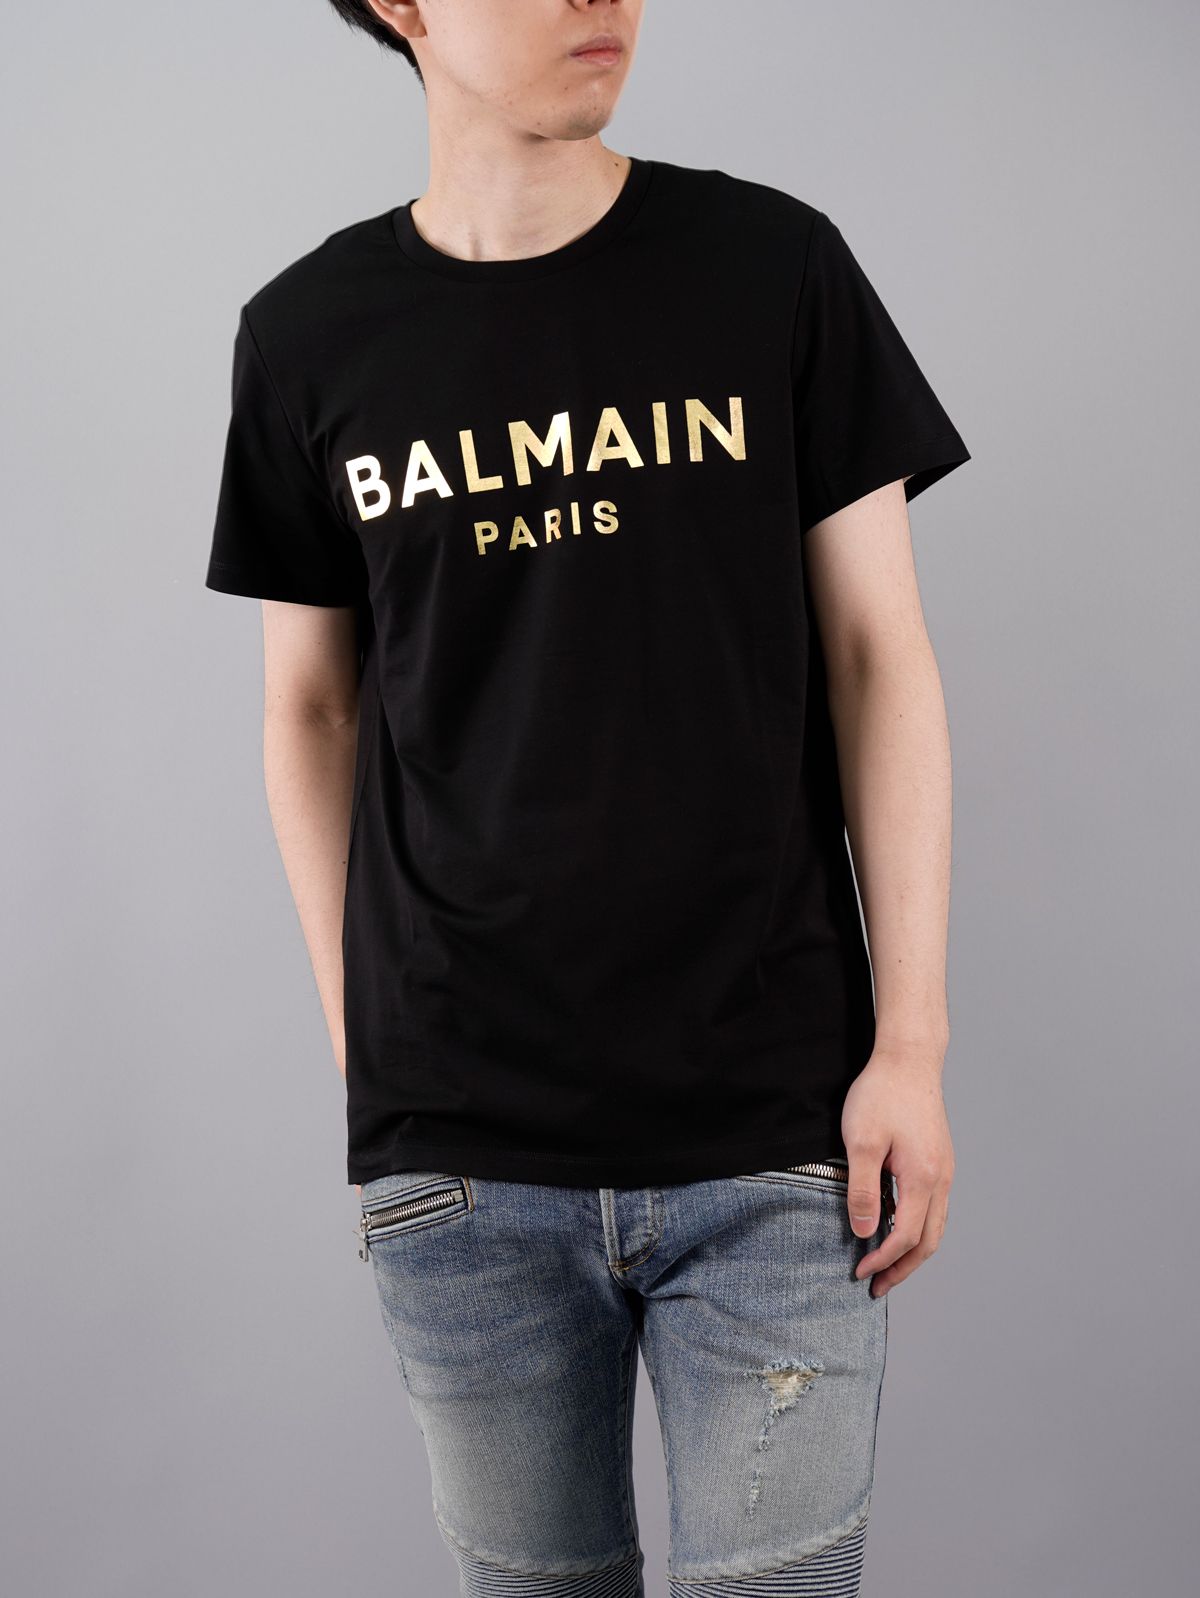 BALMAIN - White Cotton T-shirt Gold Balmain Paris Metallic Logo 